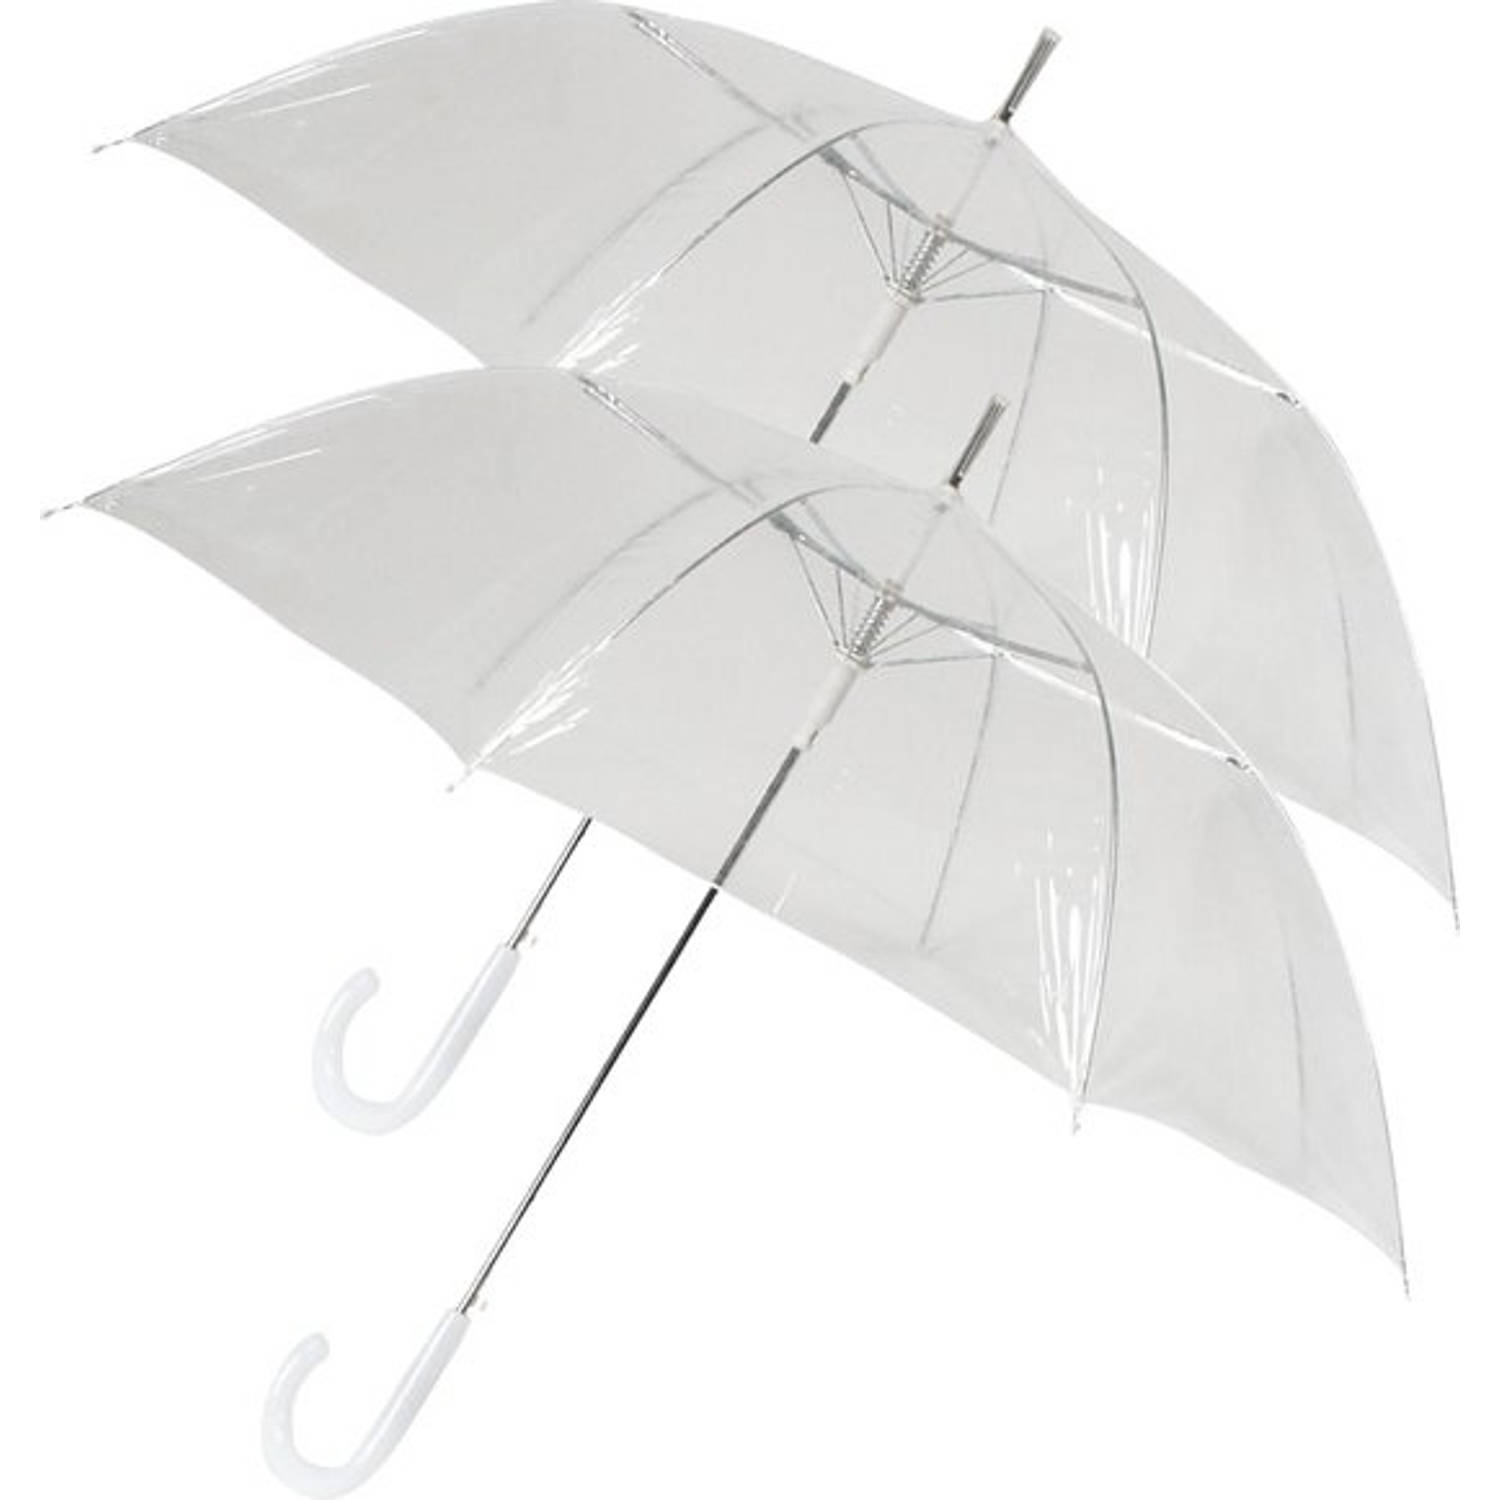 2x Elegante transparant plastic paraplu 104 cm - doorzichtige paraplu - trouwparaplu - bruidsparaplu - trouwen - bruiloft - fashionable